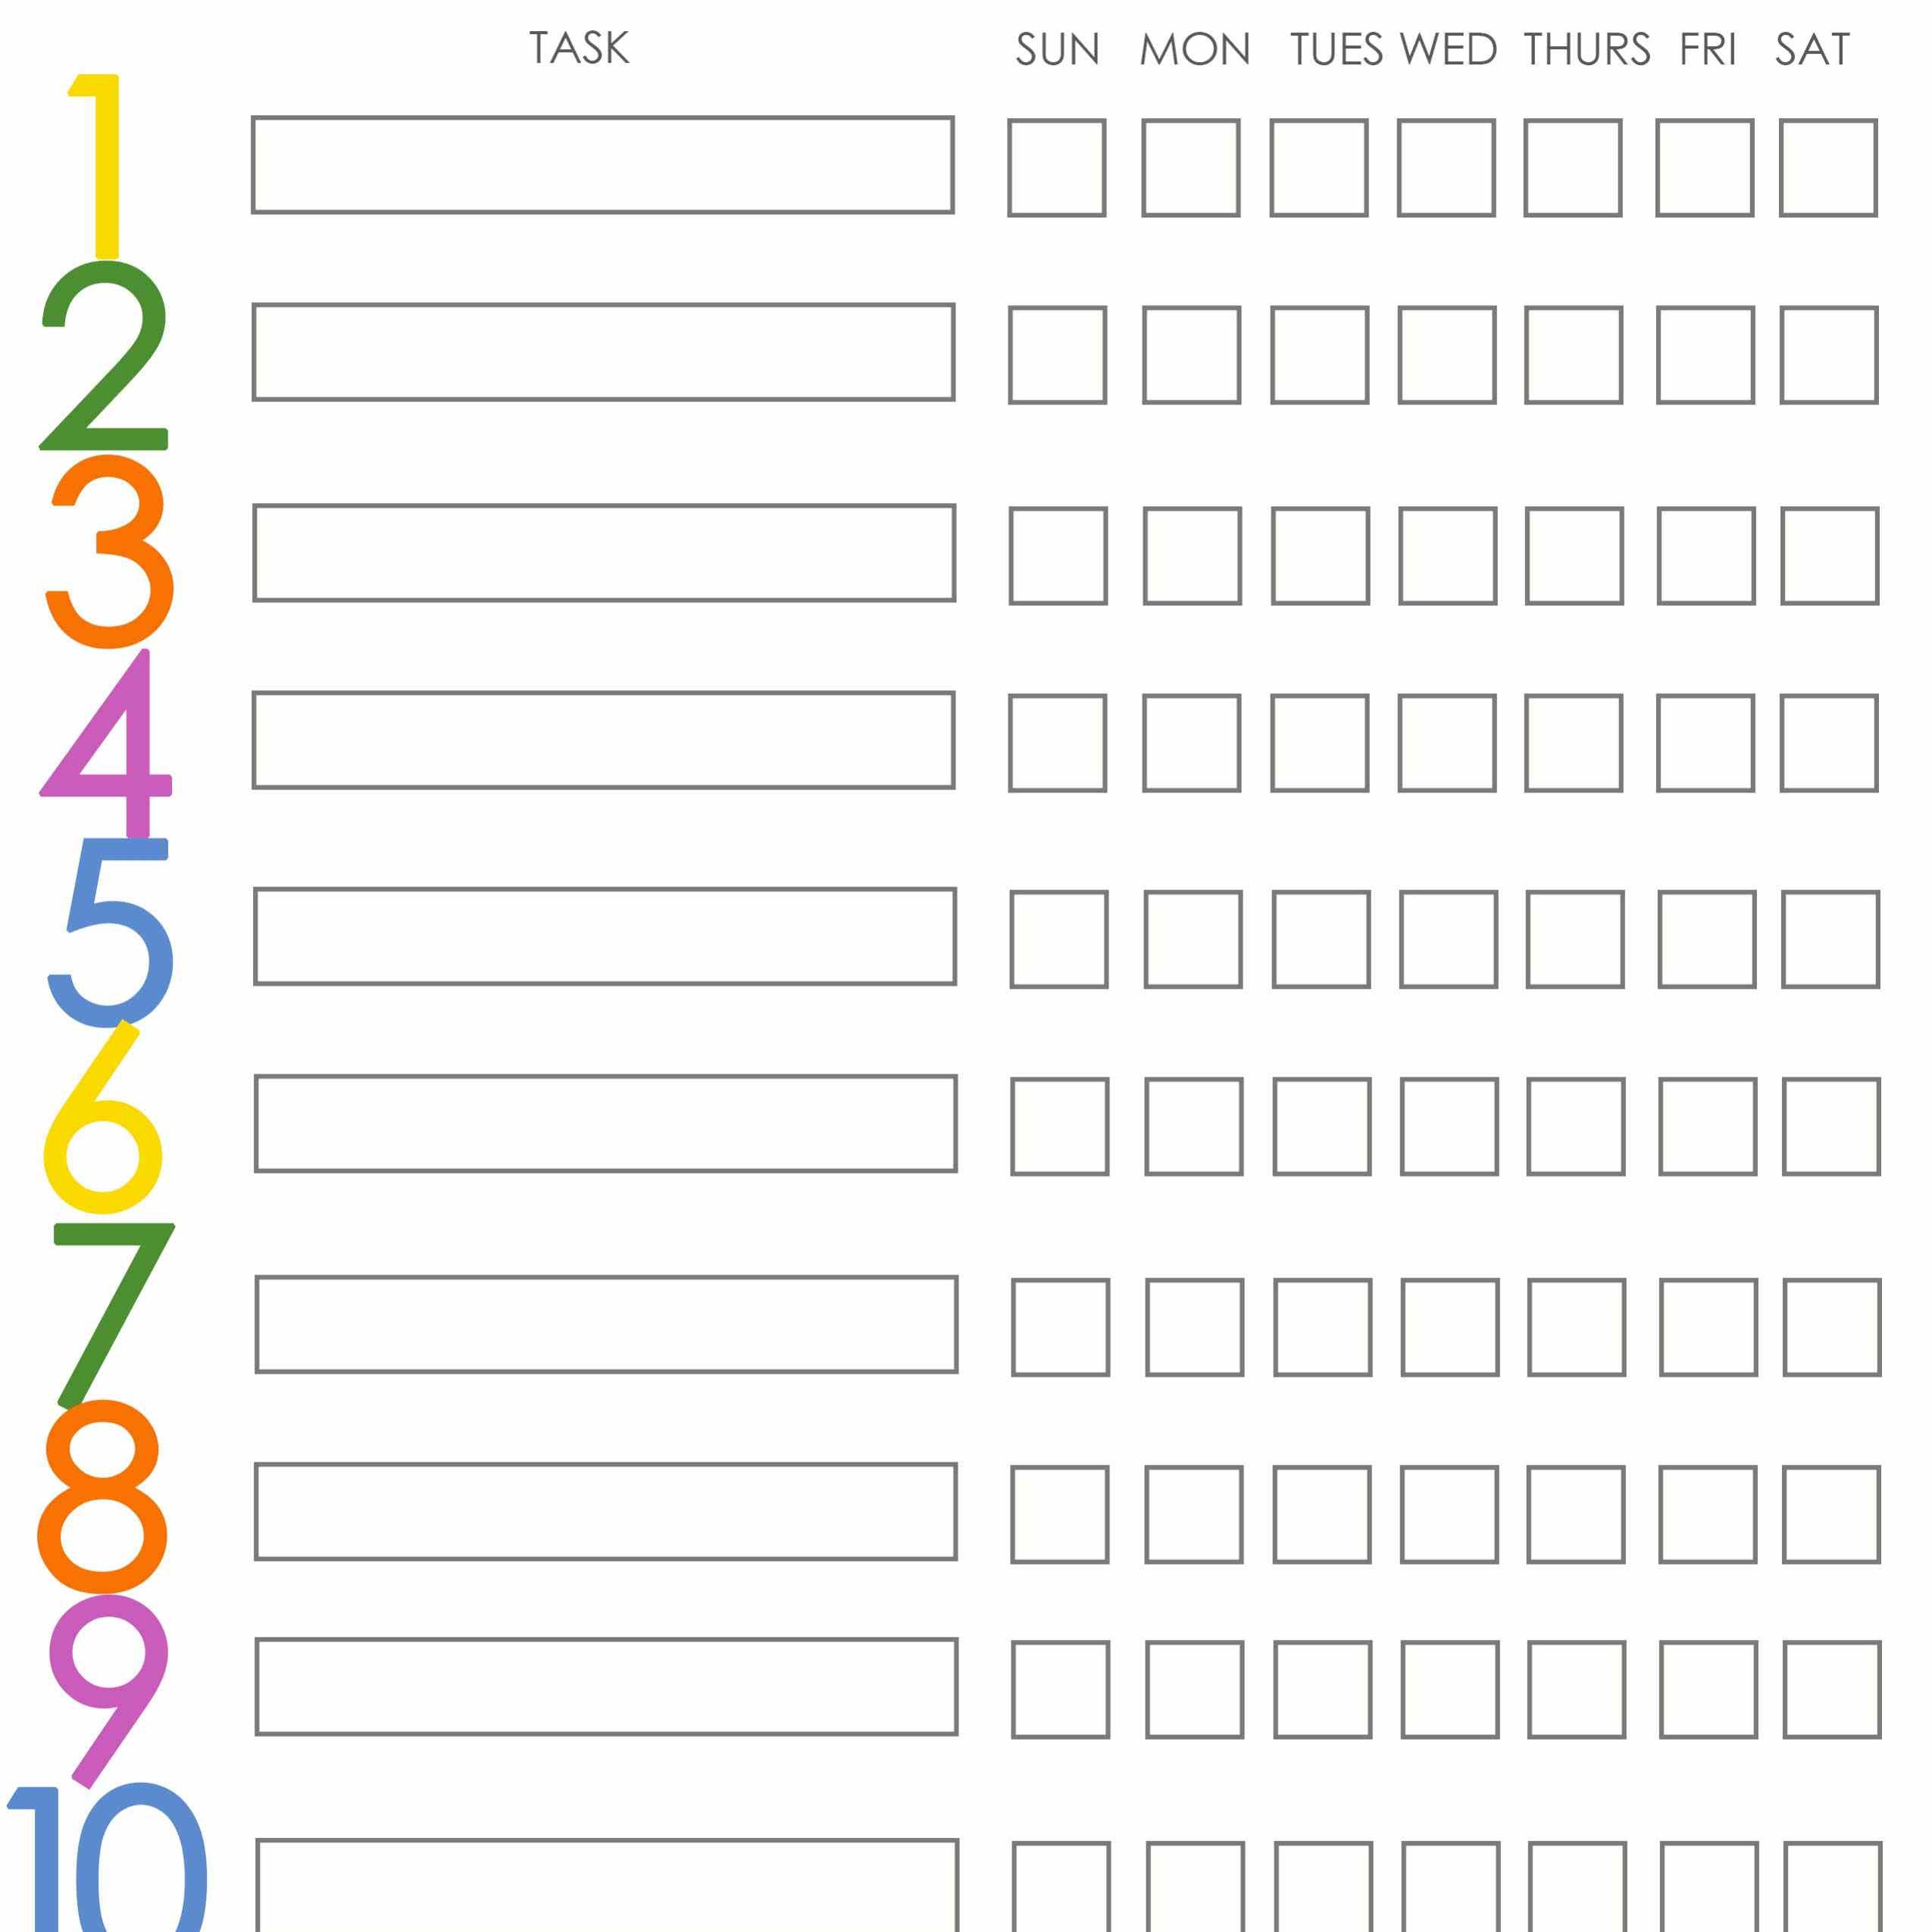 Free Printable Weekly Chore Charts - Free Printable Chore Charts For Kids